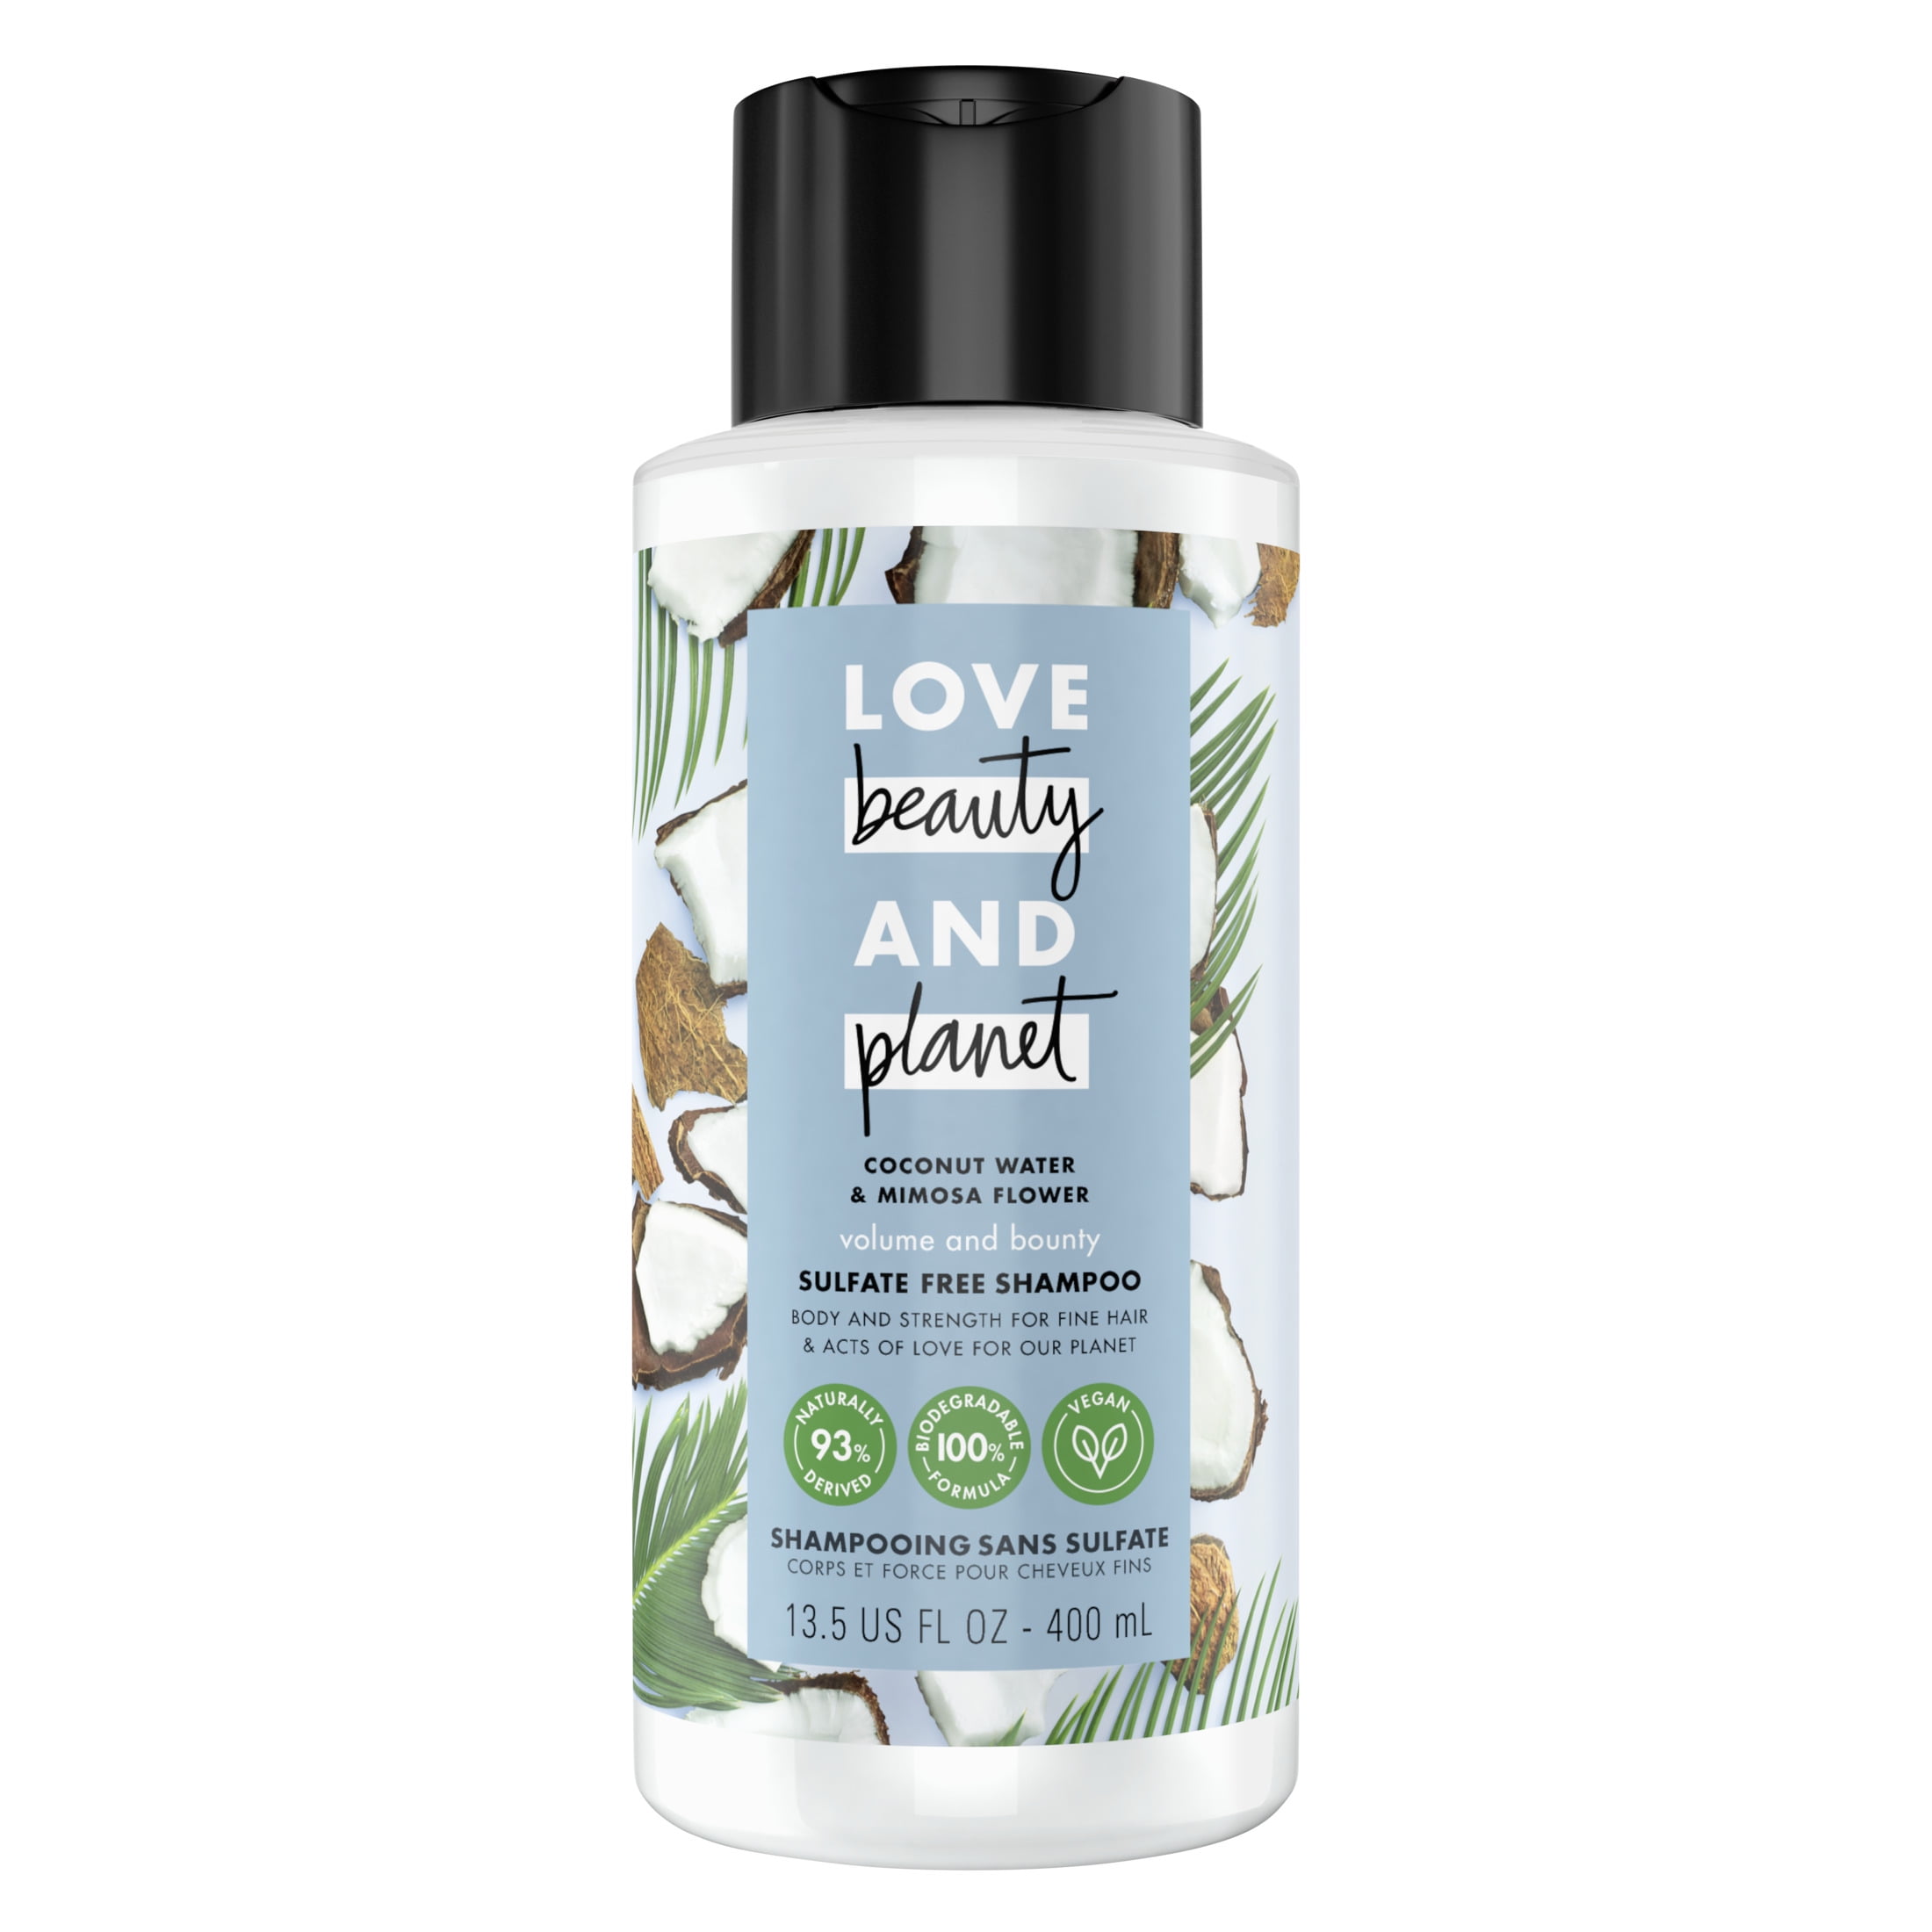 Love Beauty and Planet Volumizing Shampoo, Coconut Water & Mimosa Flower, Sulfate-free, 13.5 Walmart.com